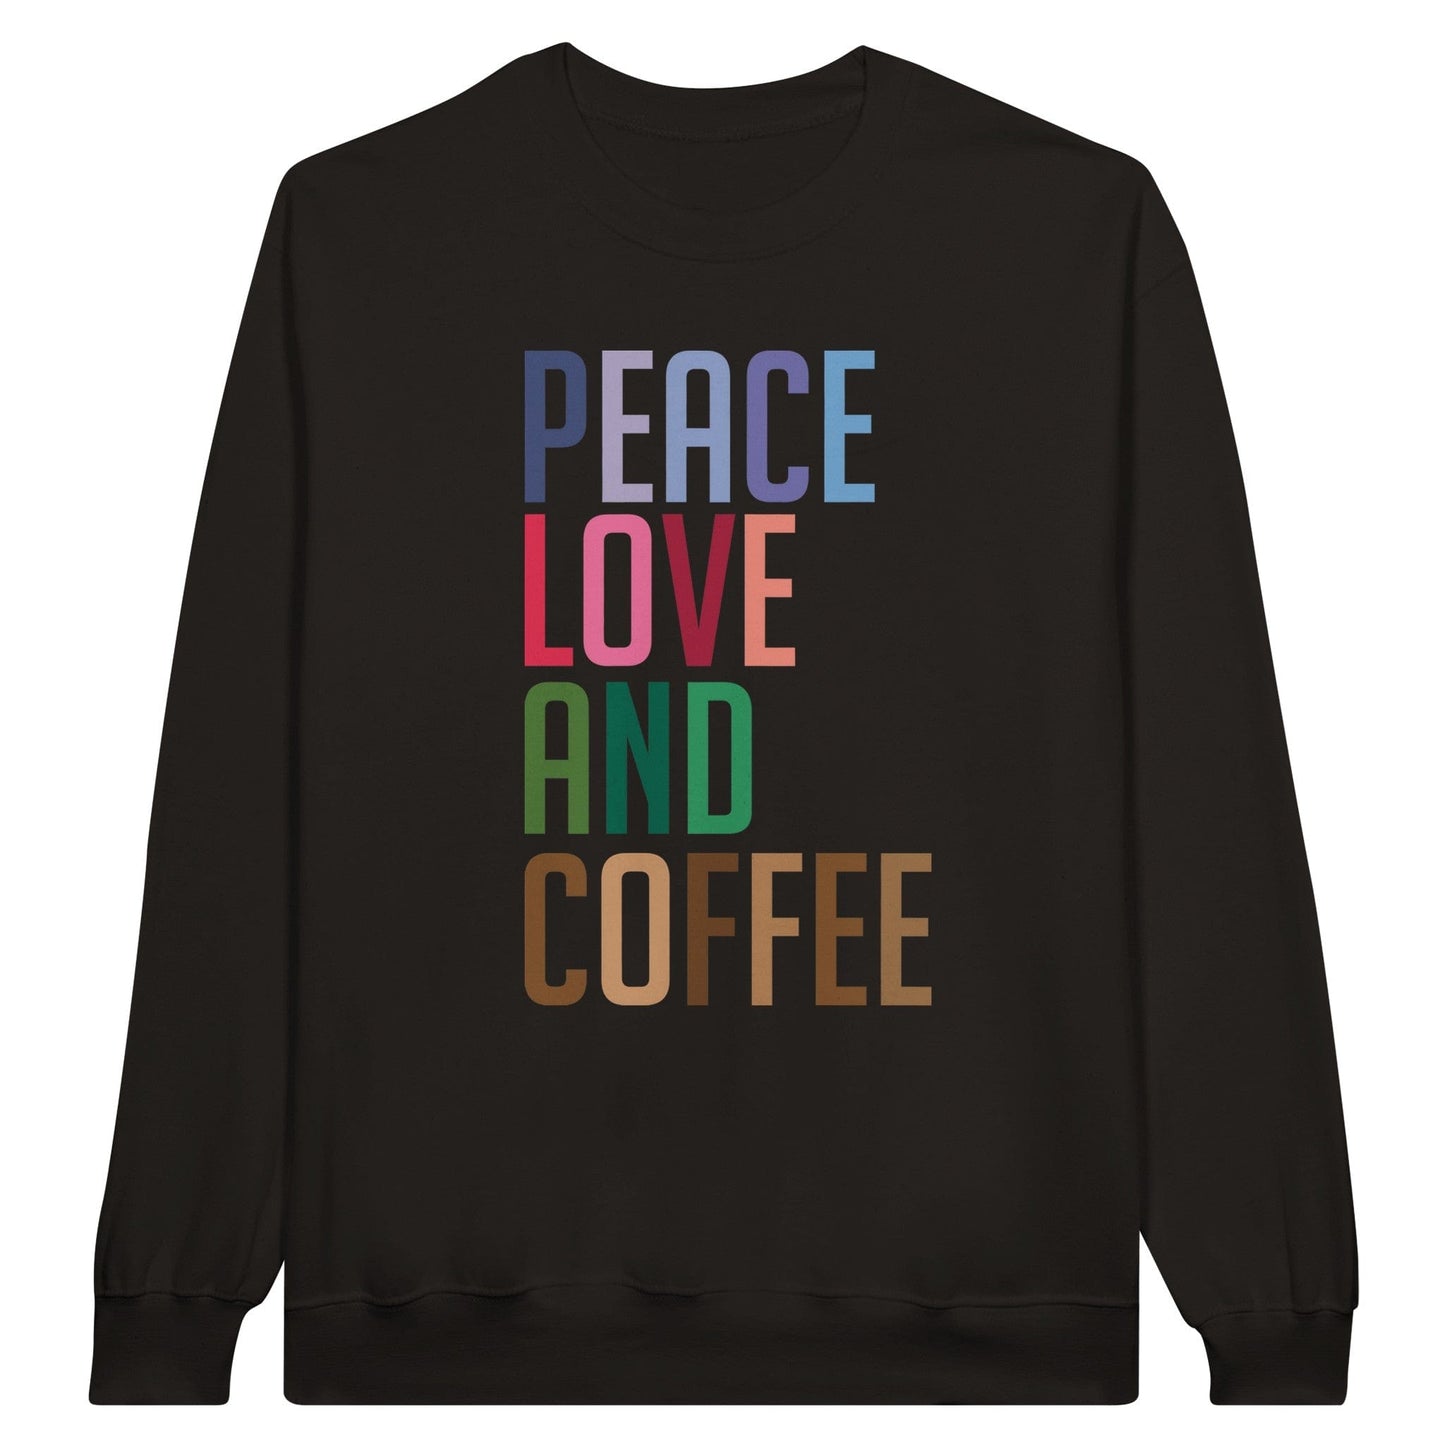 Good Bean Gifts Copy of "Peace Love and Coffee" - Classic Unisex Crewneck Sweatshirt S / Black